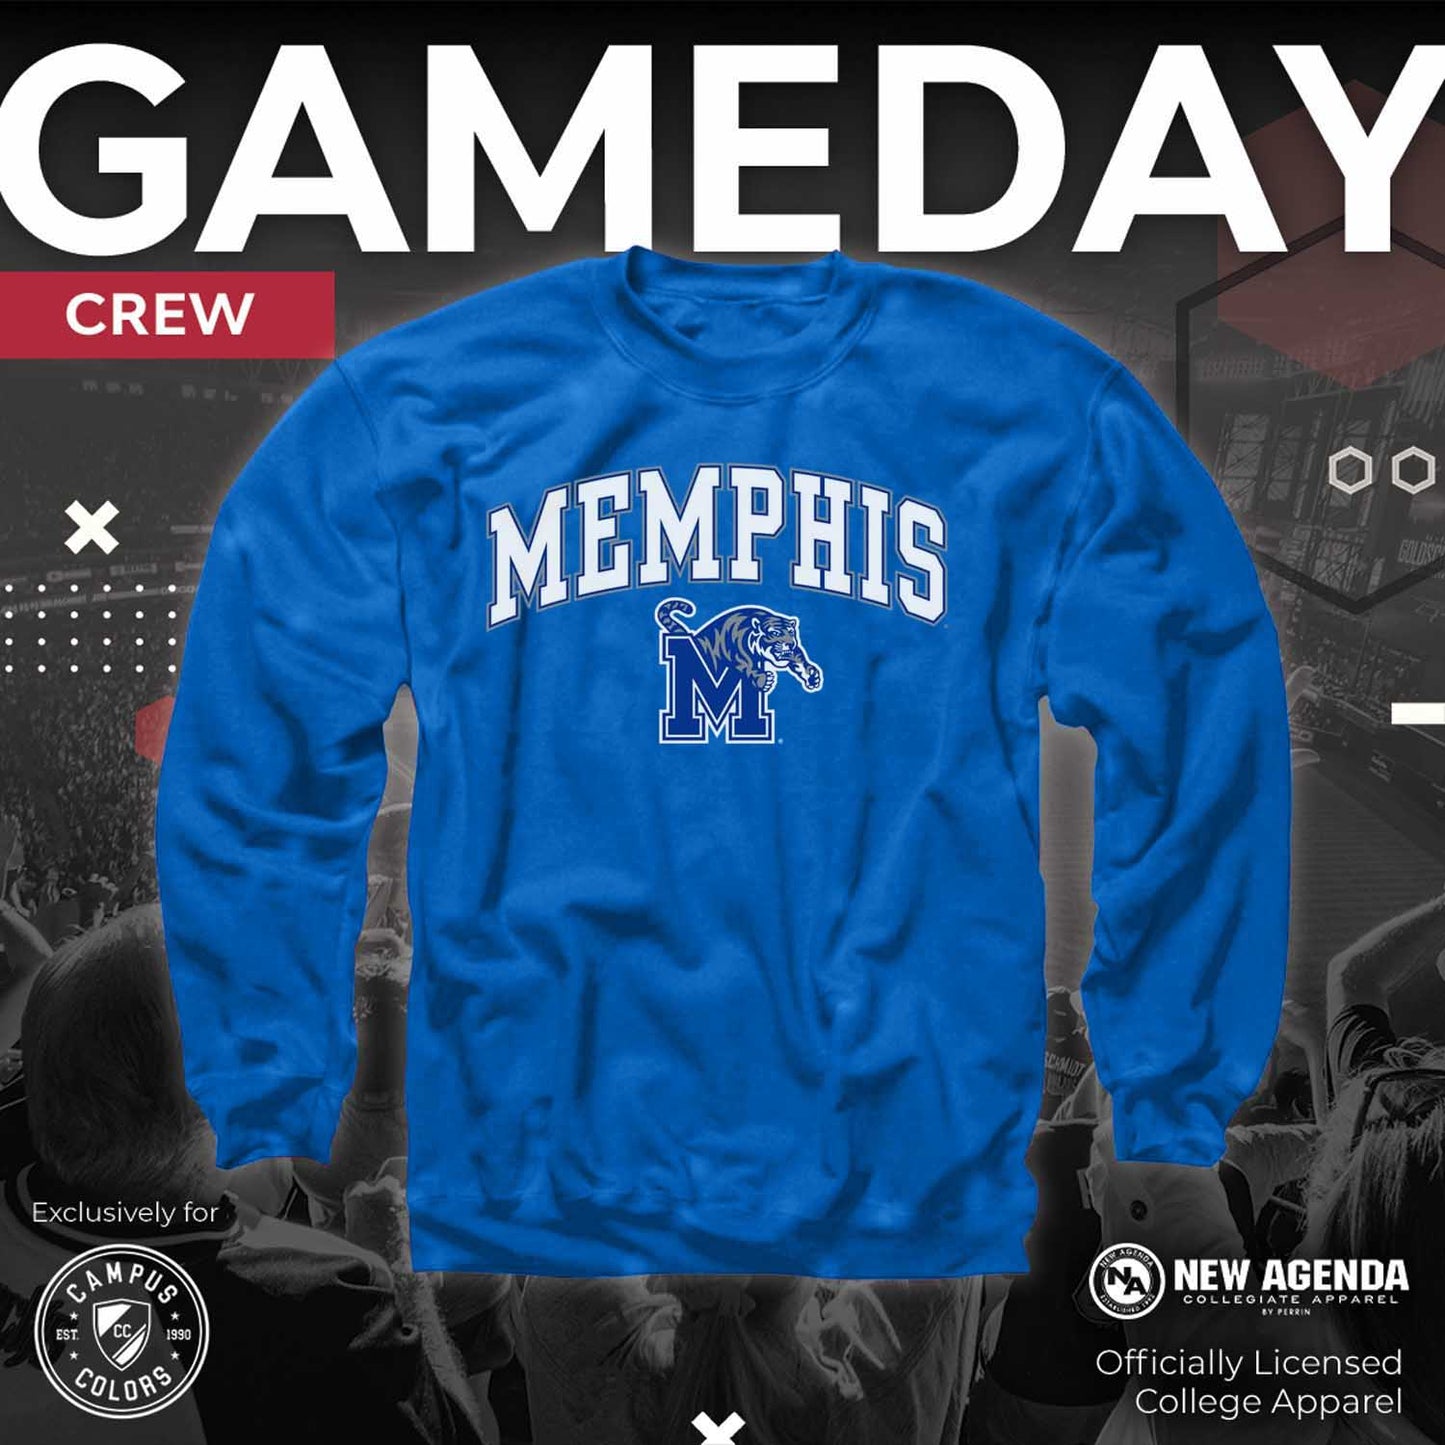 Memphis Tigers Adult Arch & Logo Soft Style Gameday Crewneck Sweatshirt - Royal